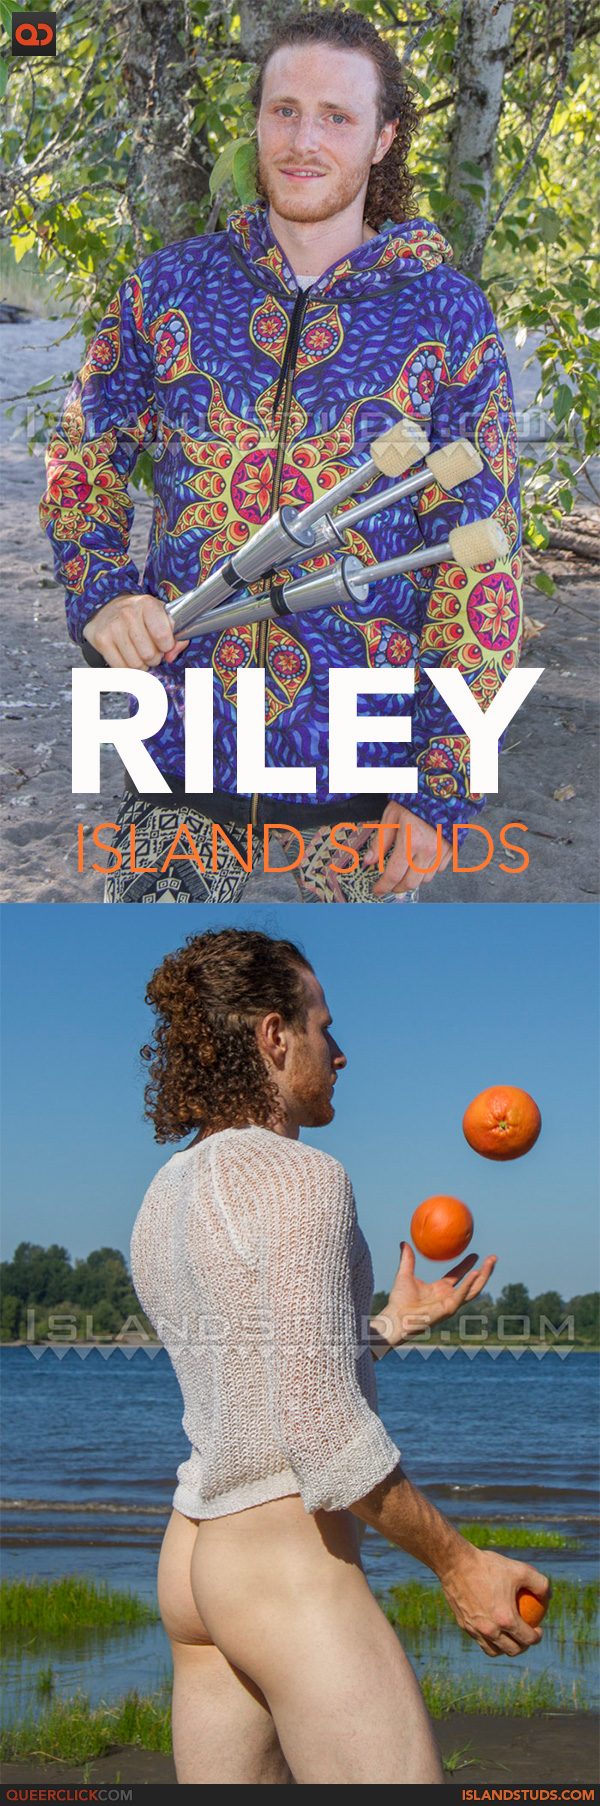 Island Studs: Riley Rodriguez